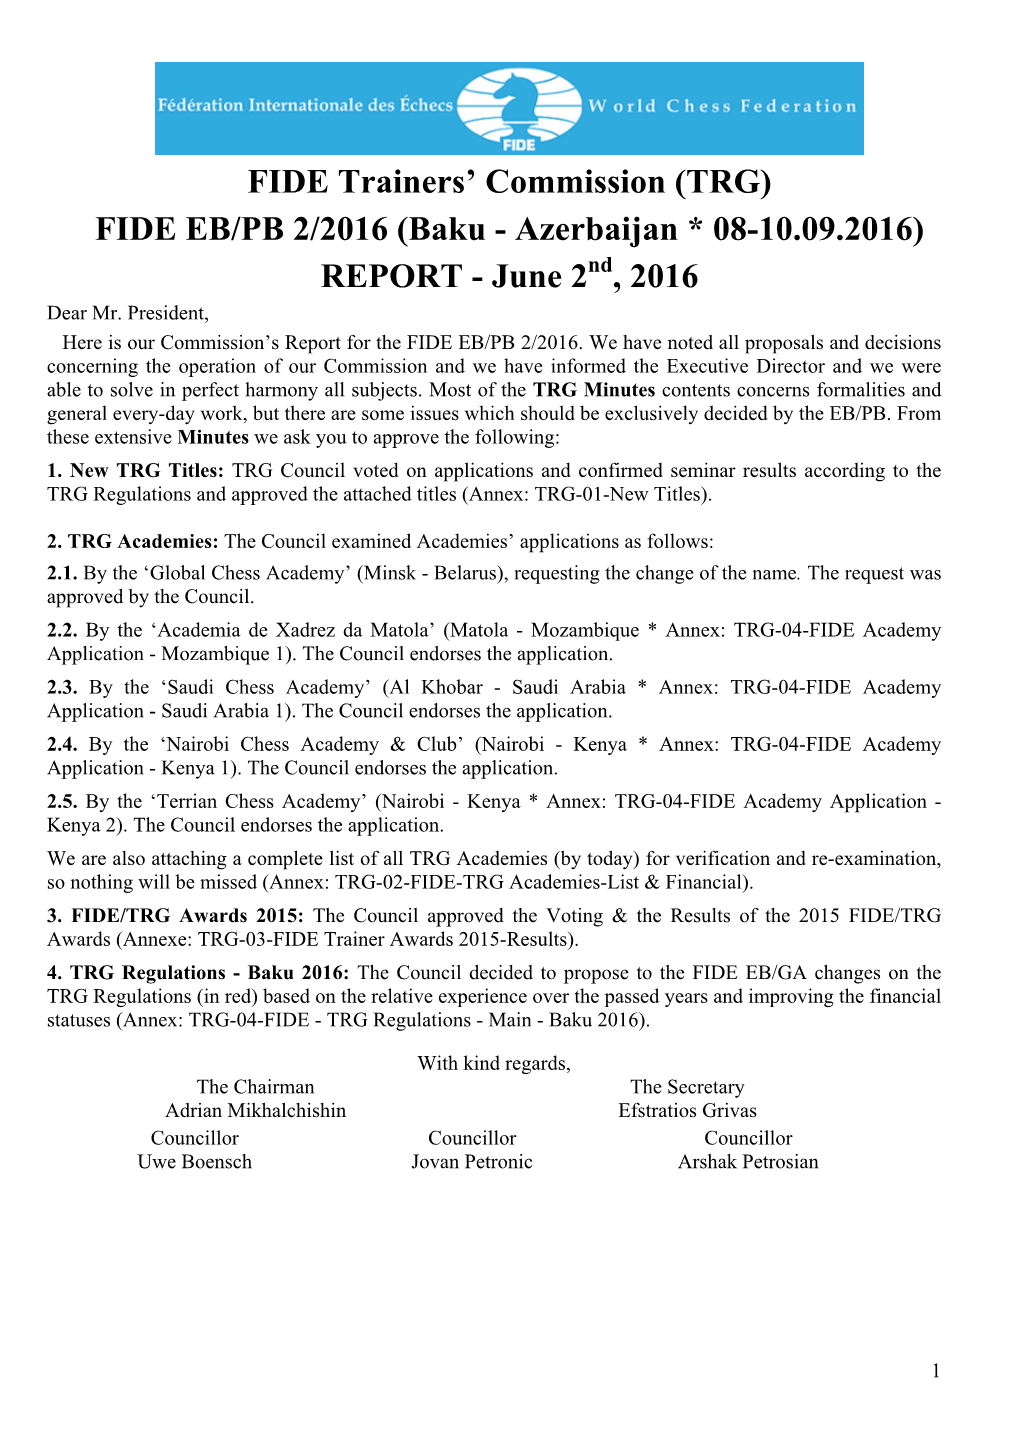 FIDE Trainers' Commission (TRG) FIDE EB/PB 2/2016